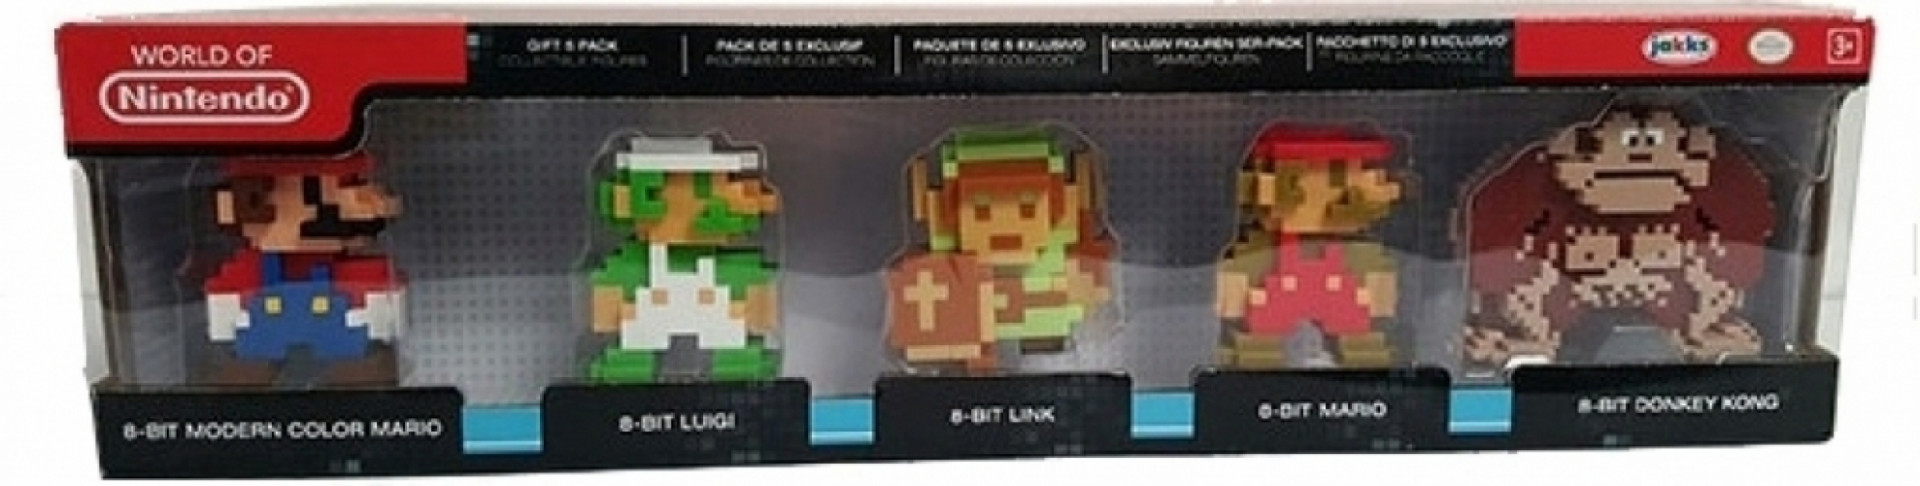 Image of World of Nintendo Mini Figure 5 Pack (8-bit characters)